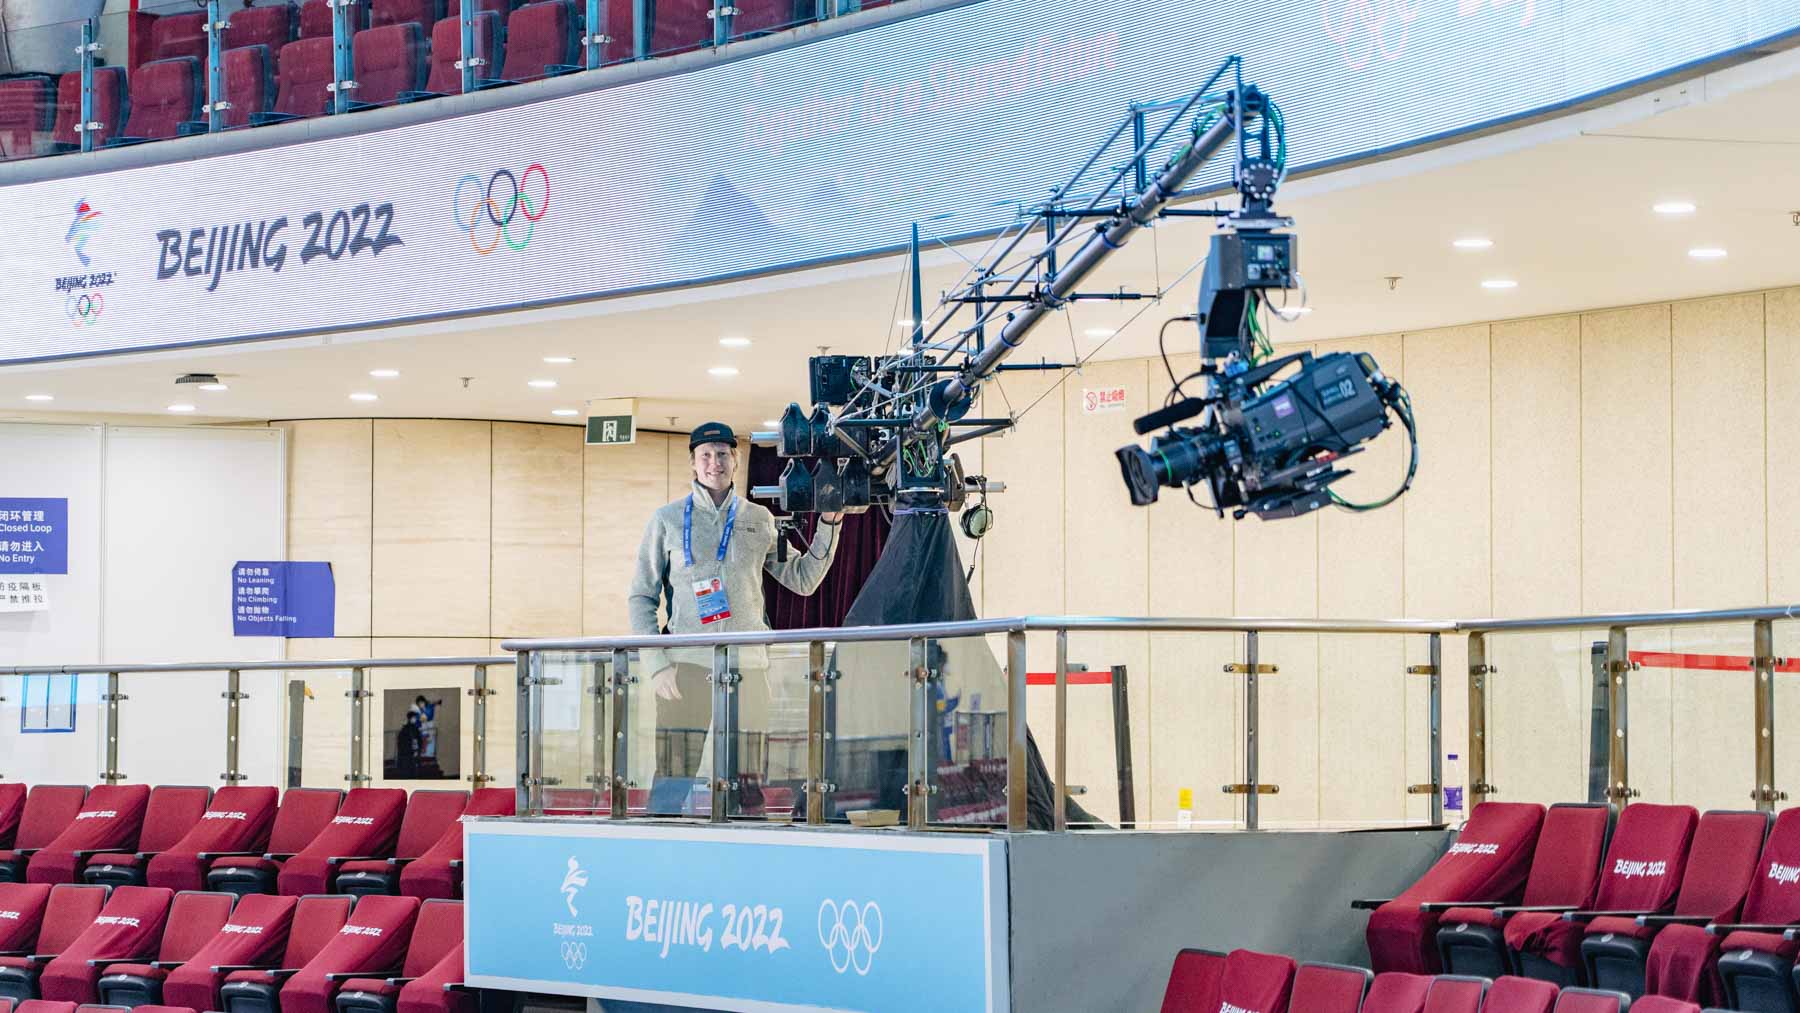 Brendan Schnurr operating jib at Beijing Olympics